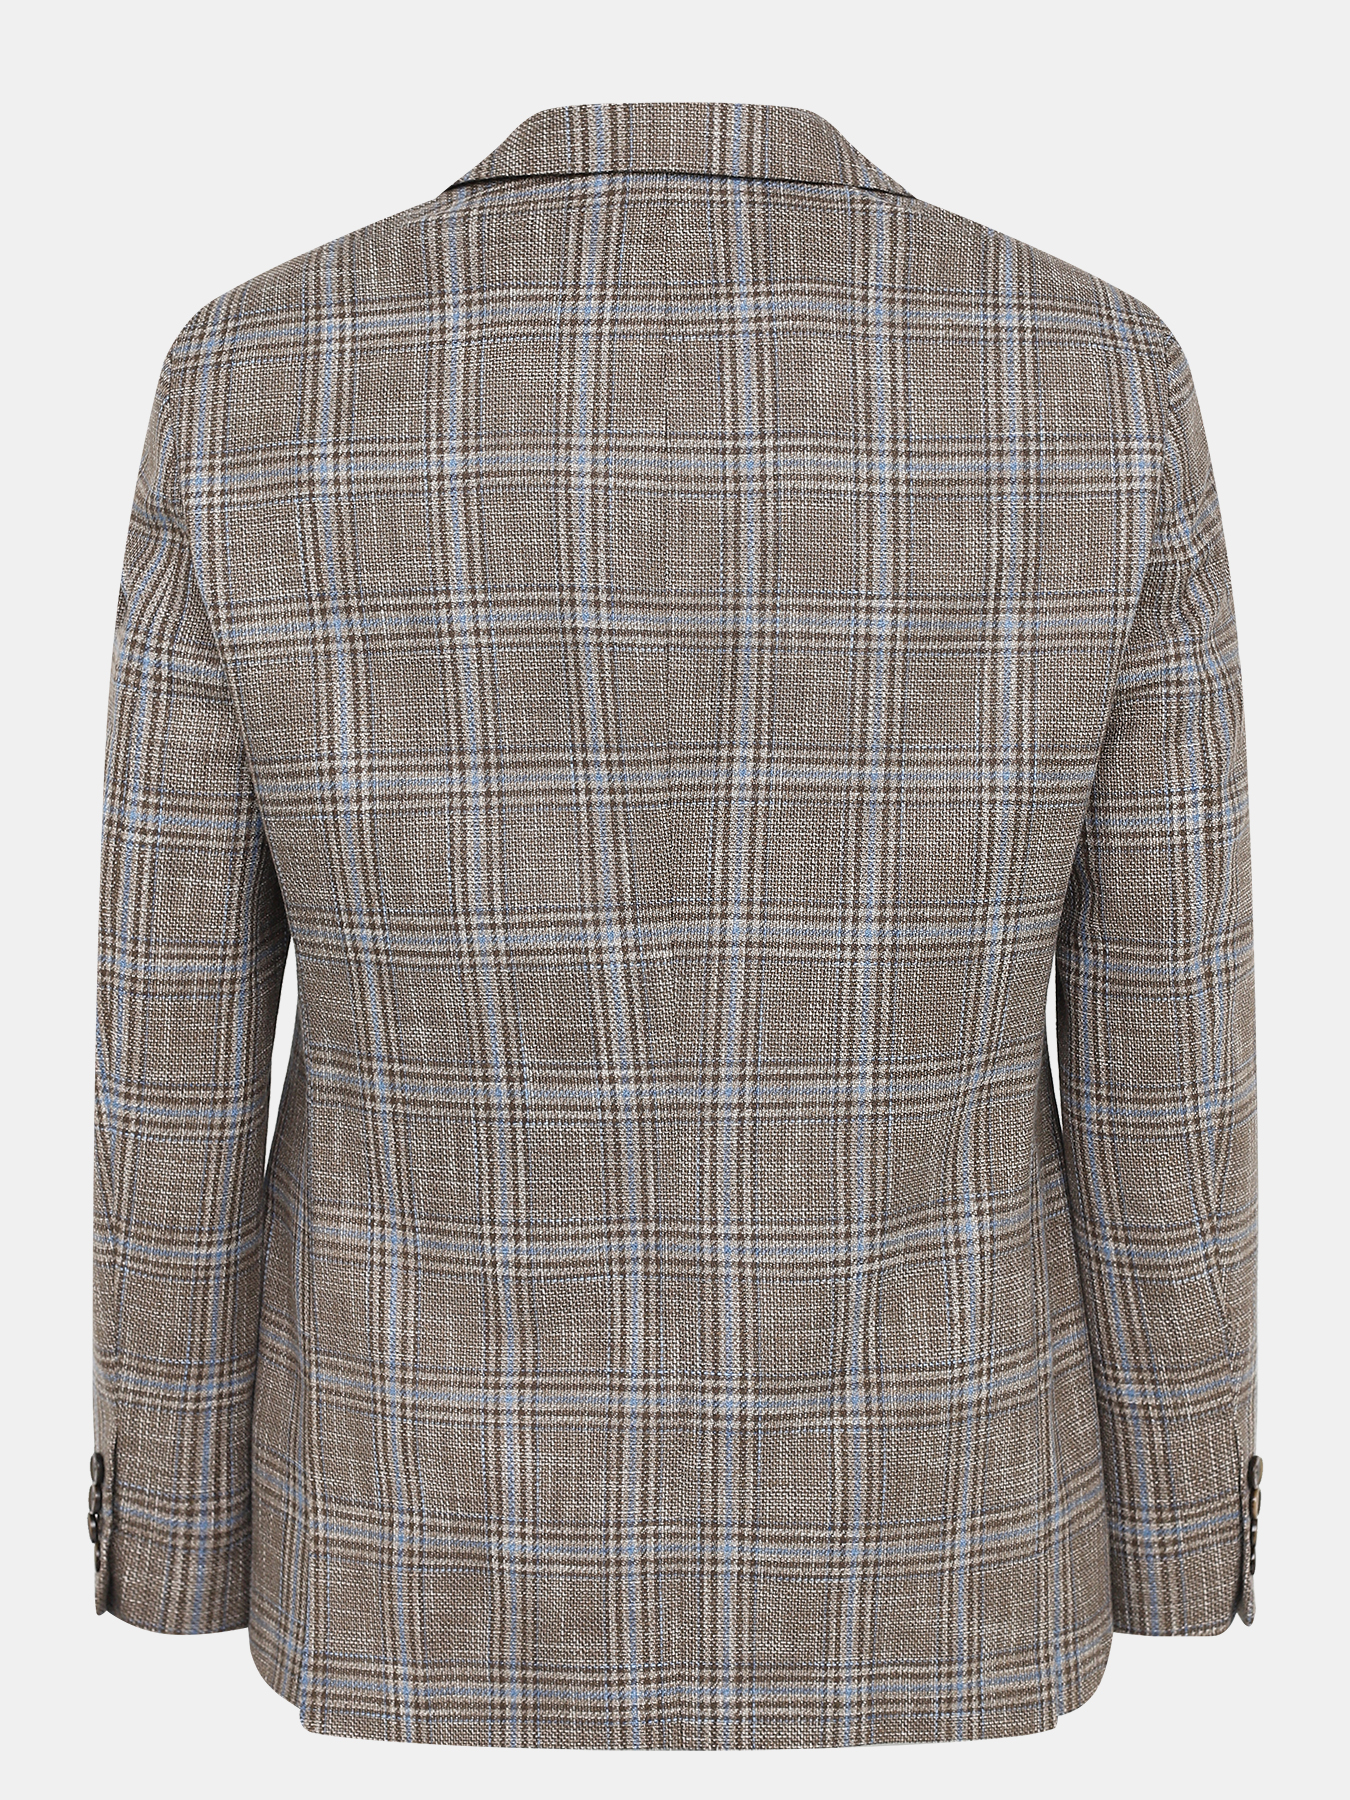 Пиджак Alessandro Manzoni 396179-061, цвет коричневый, размер 52 - фото 2